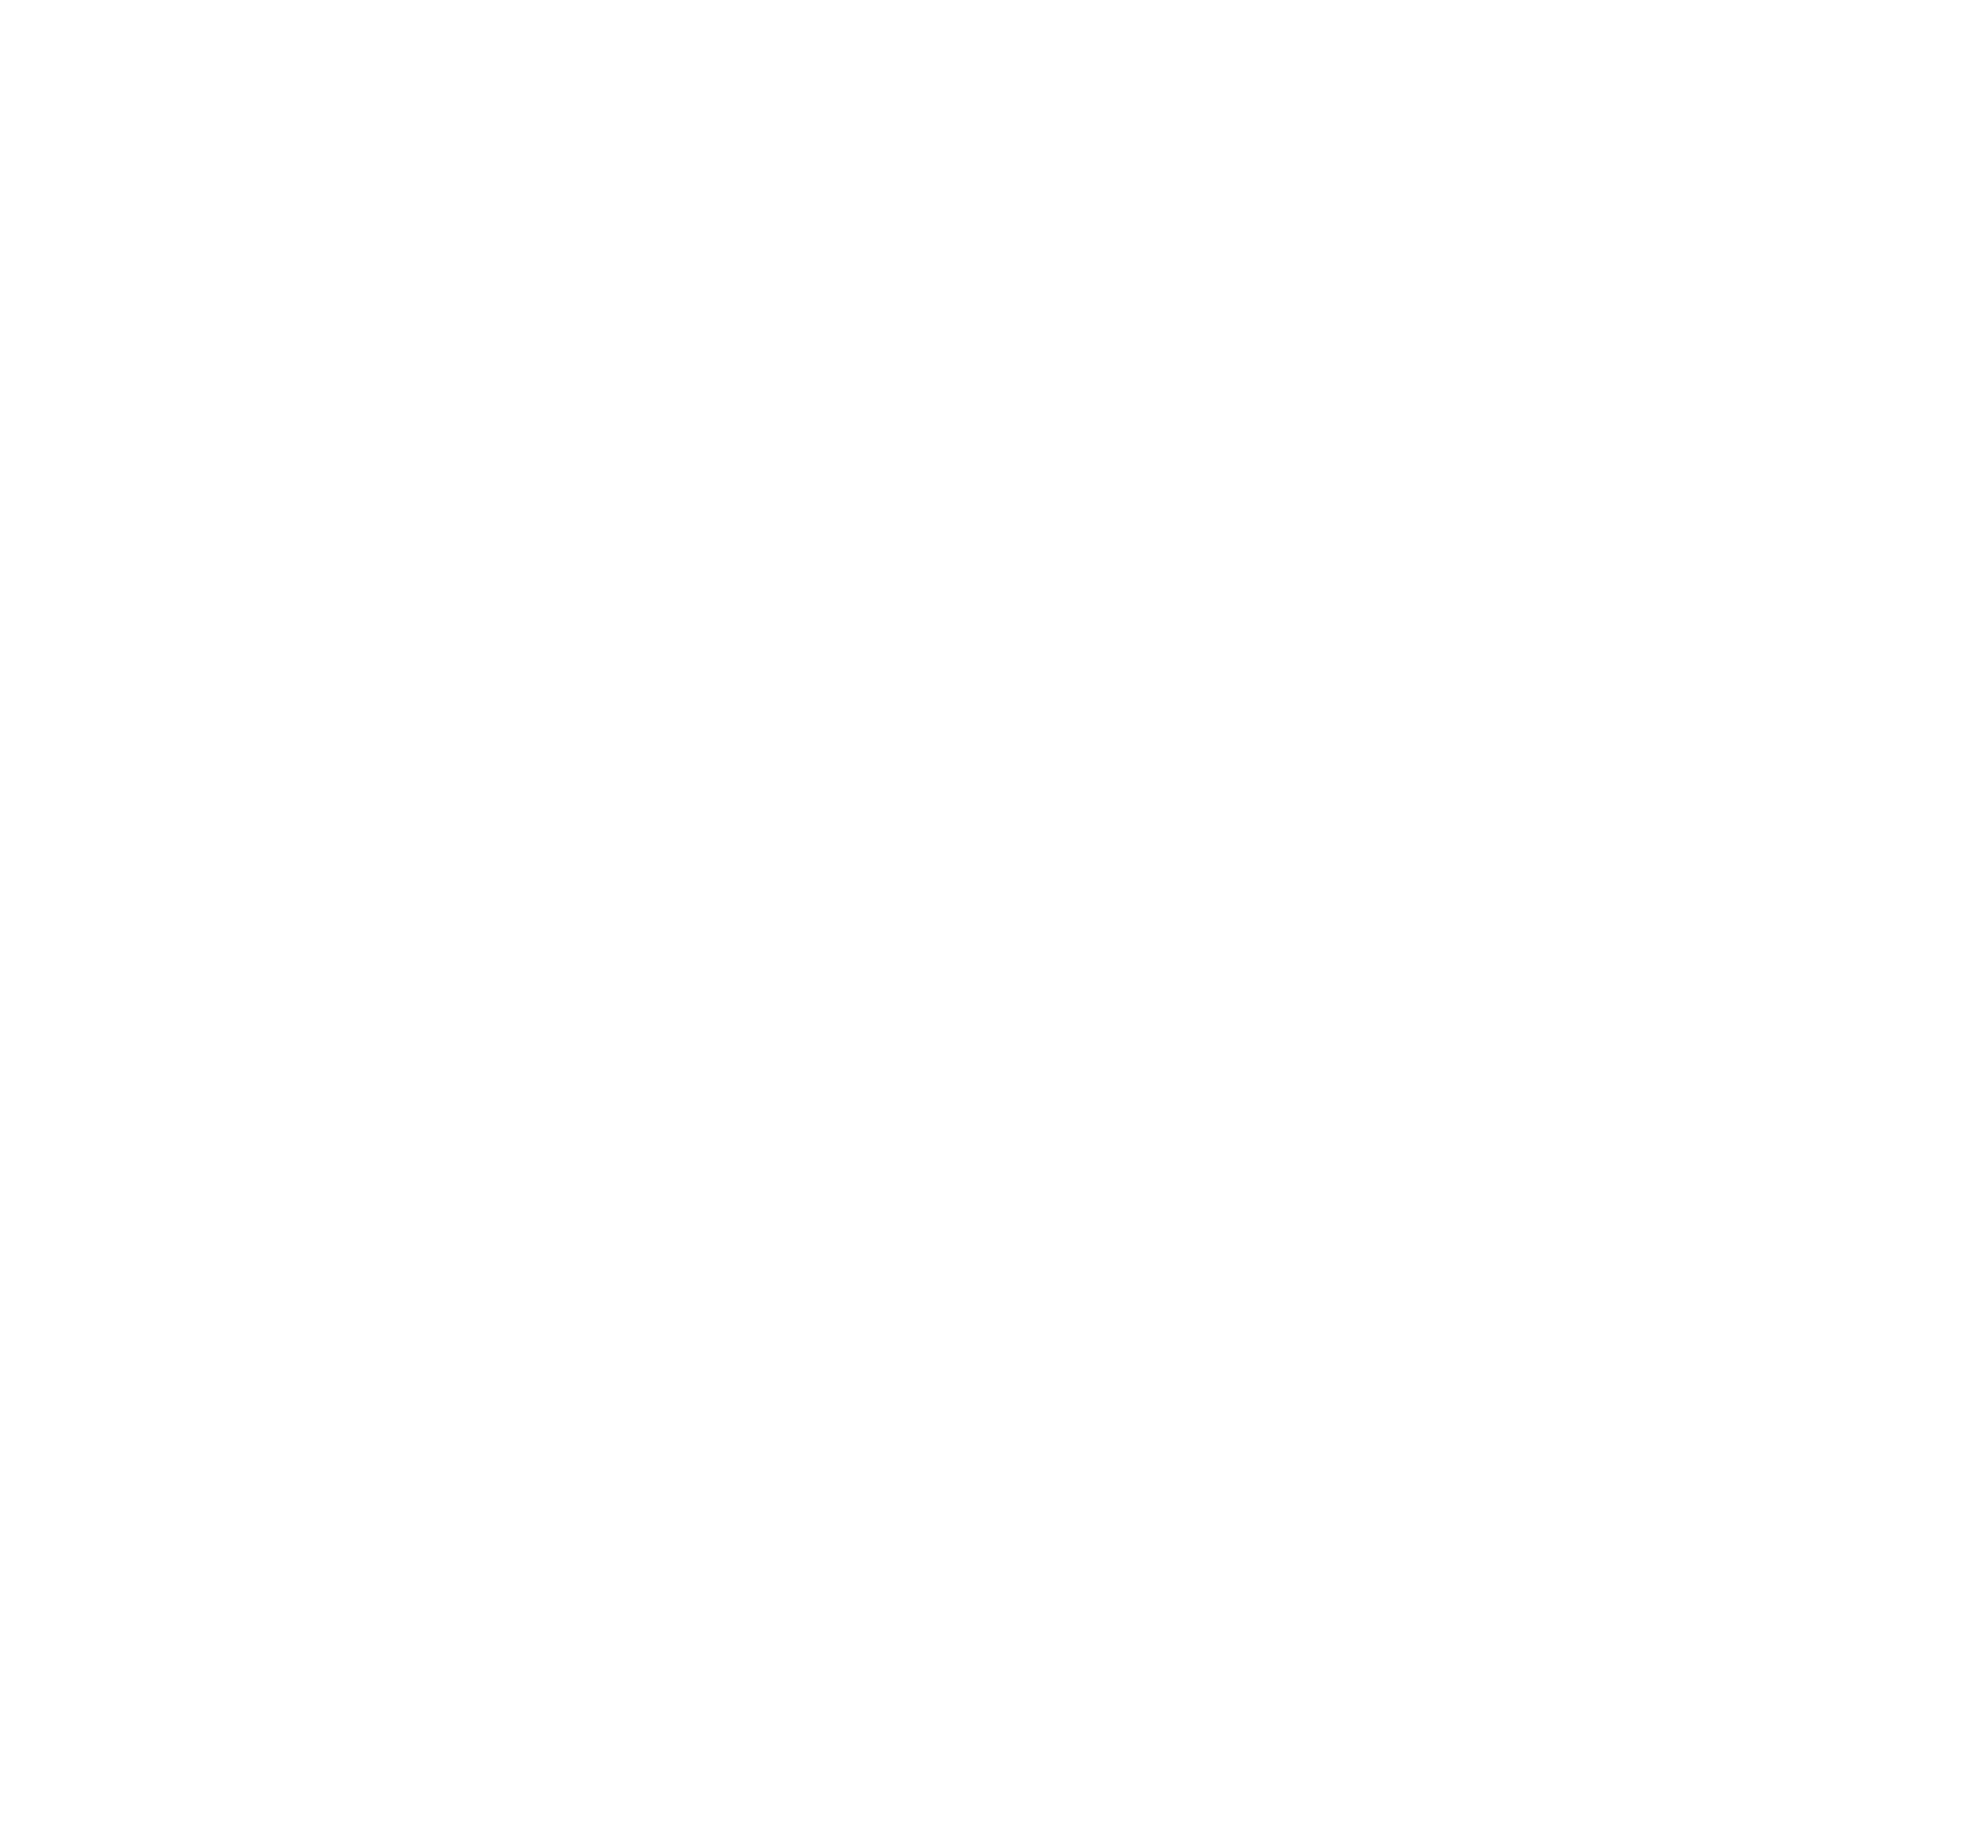 Rākau Roroa - Changing Minds